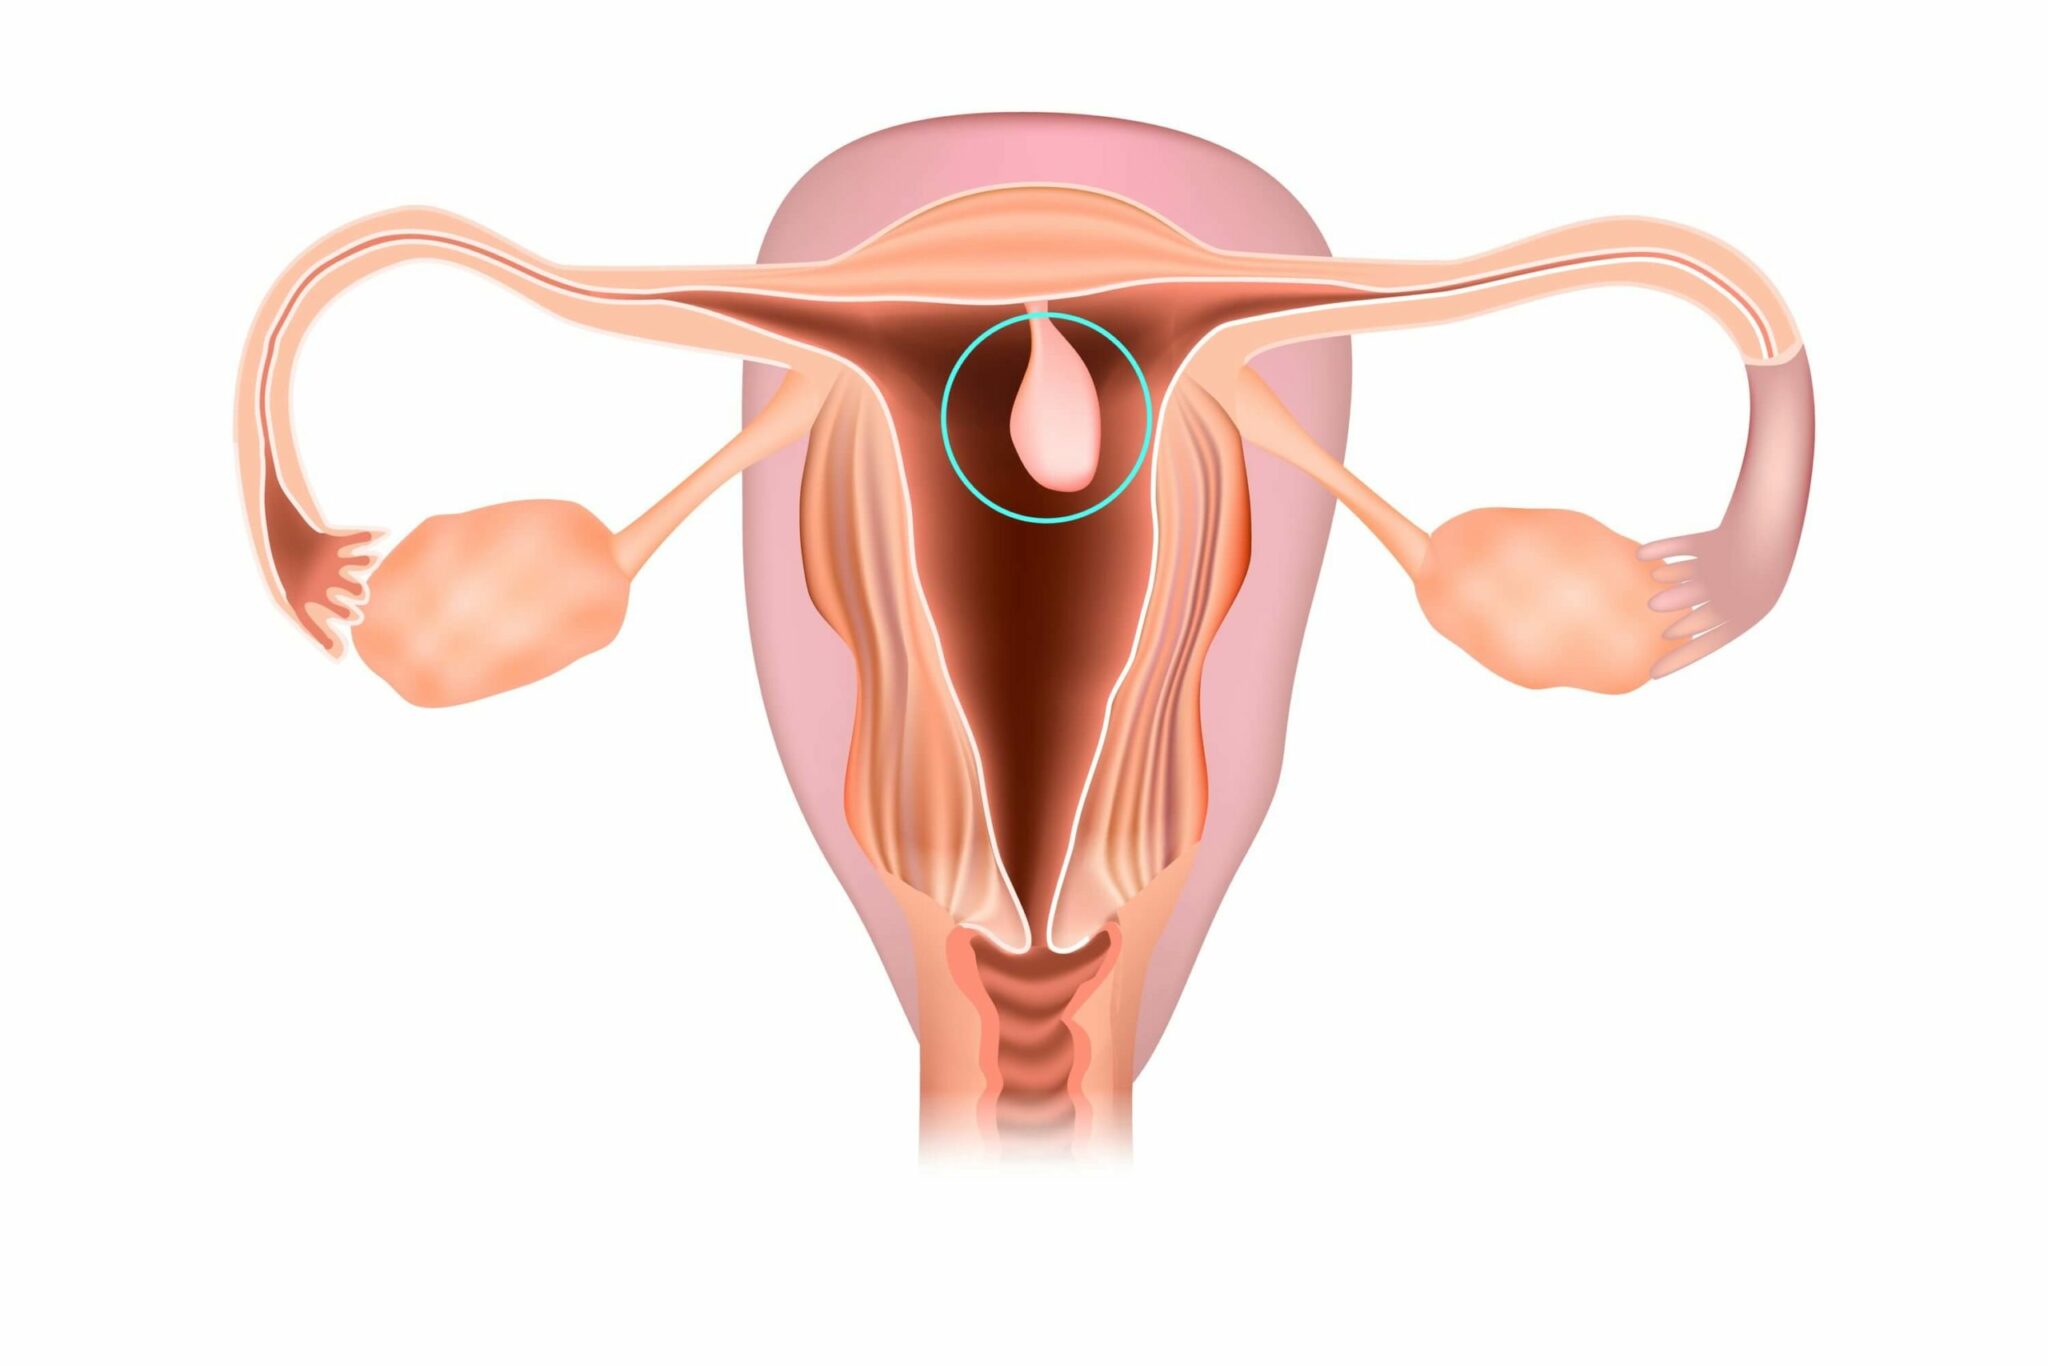 uterine polypse